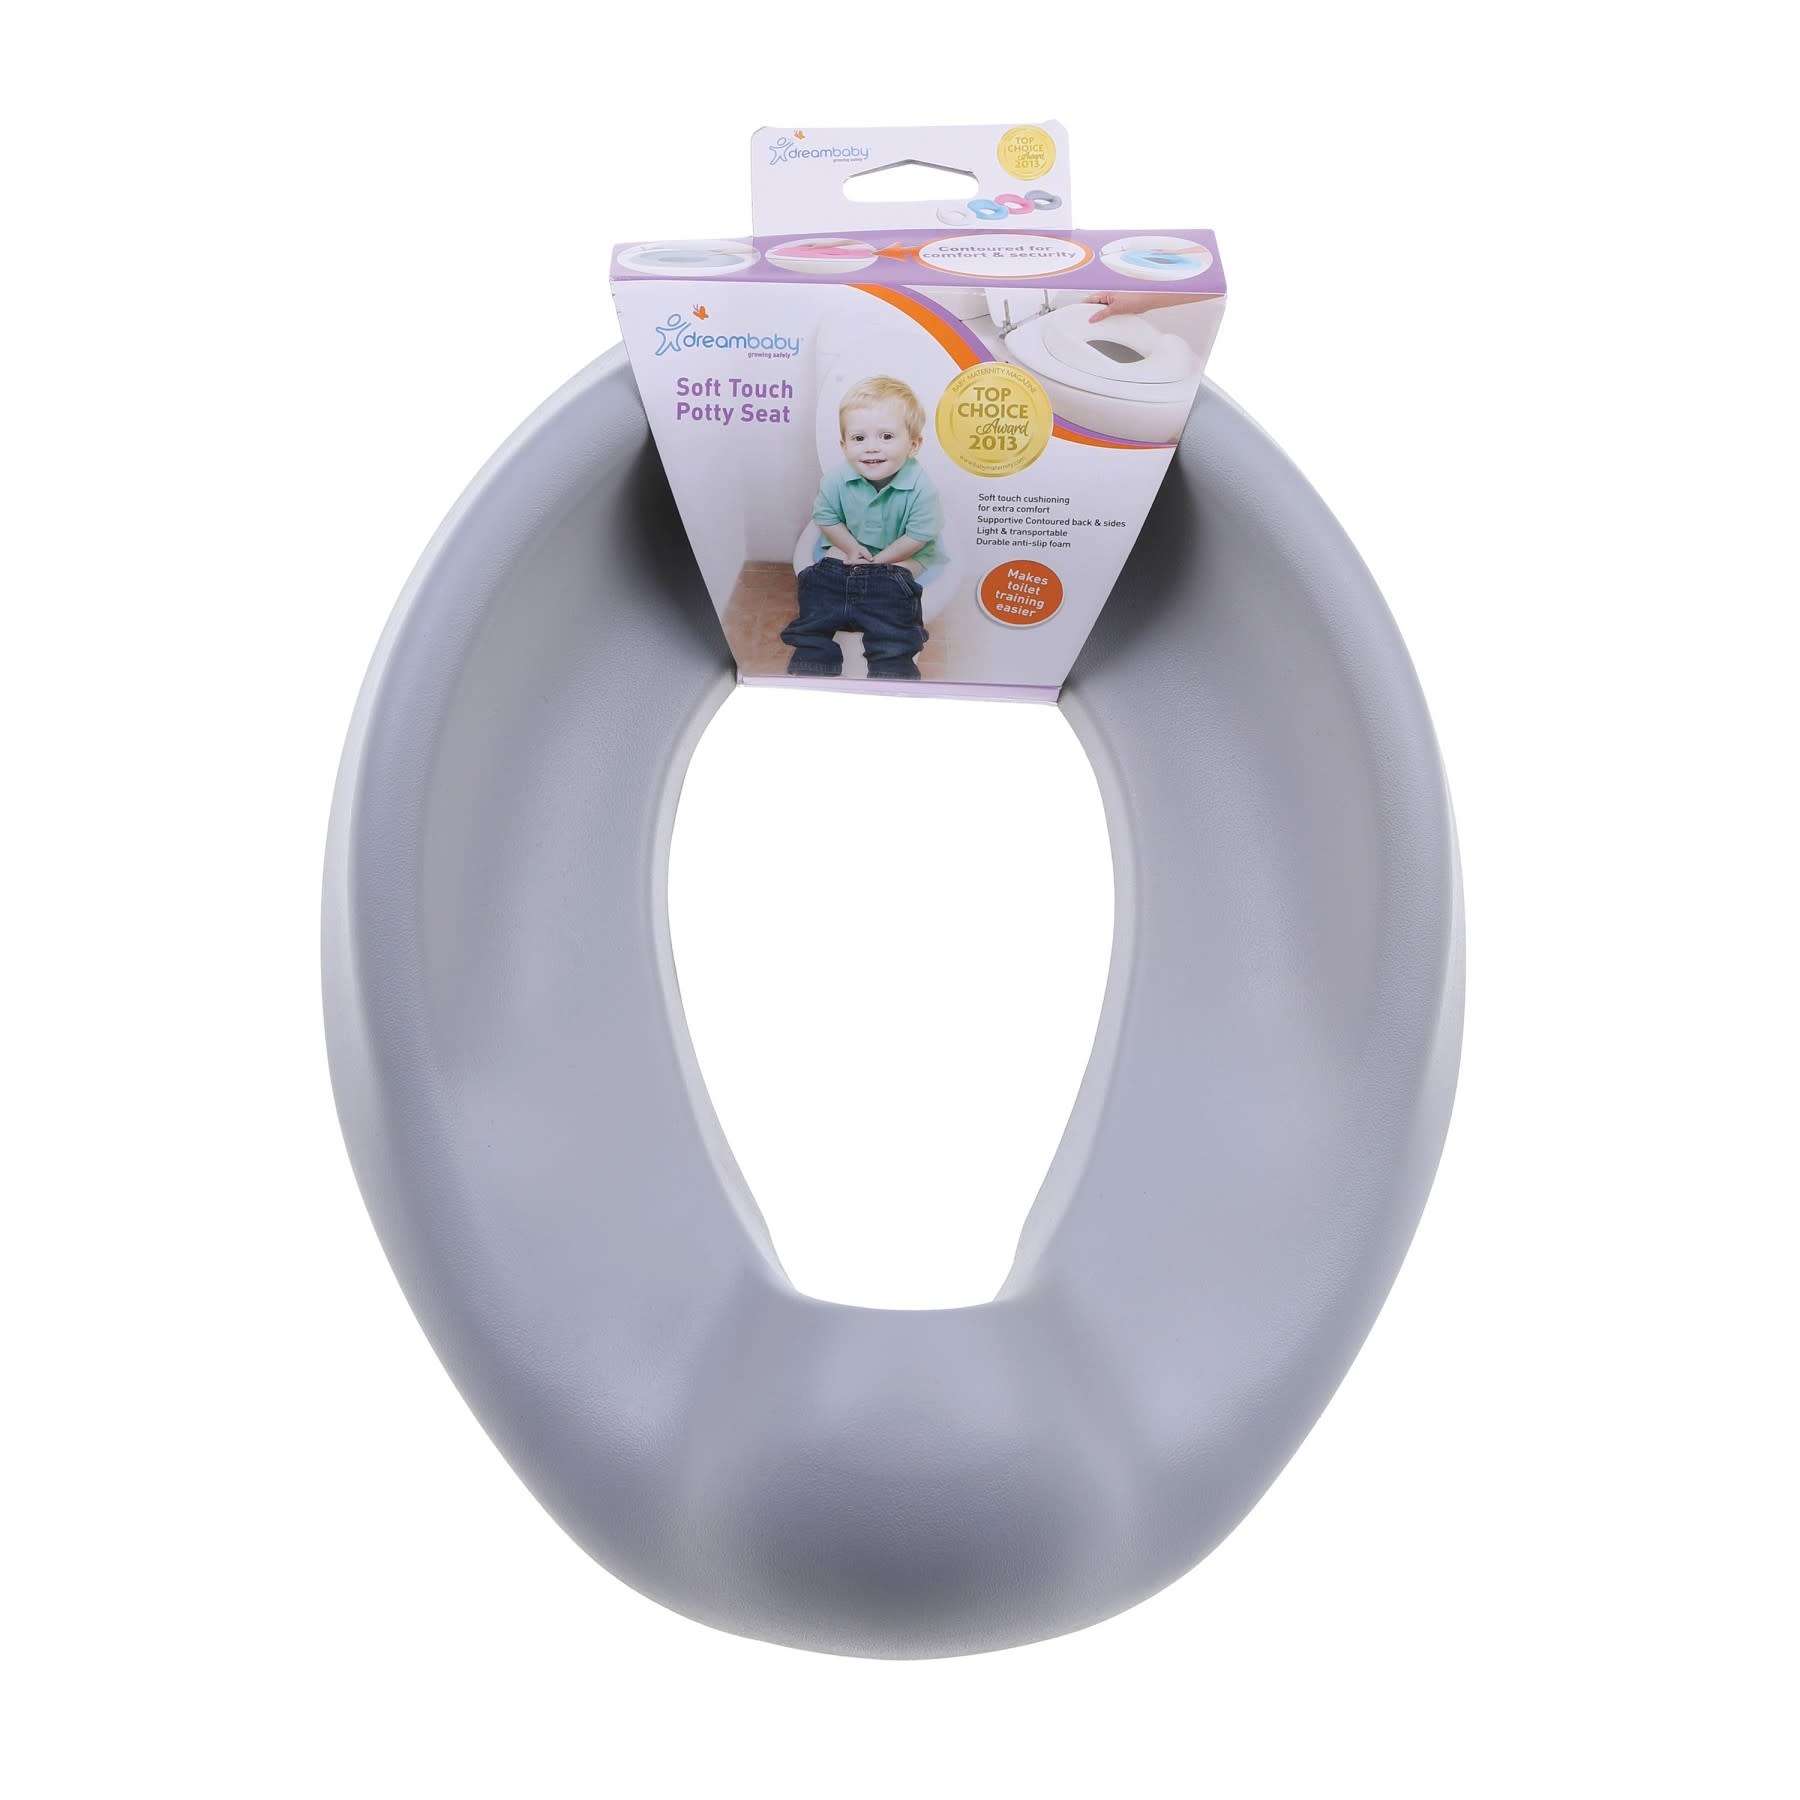 Dreambaby Dreambaby Soft Touch Potty Seat - Grey